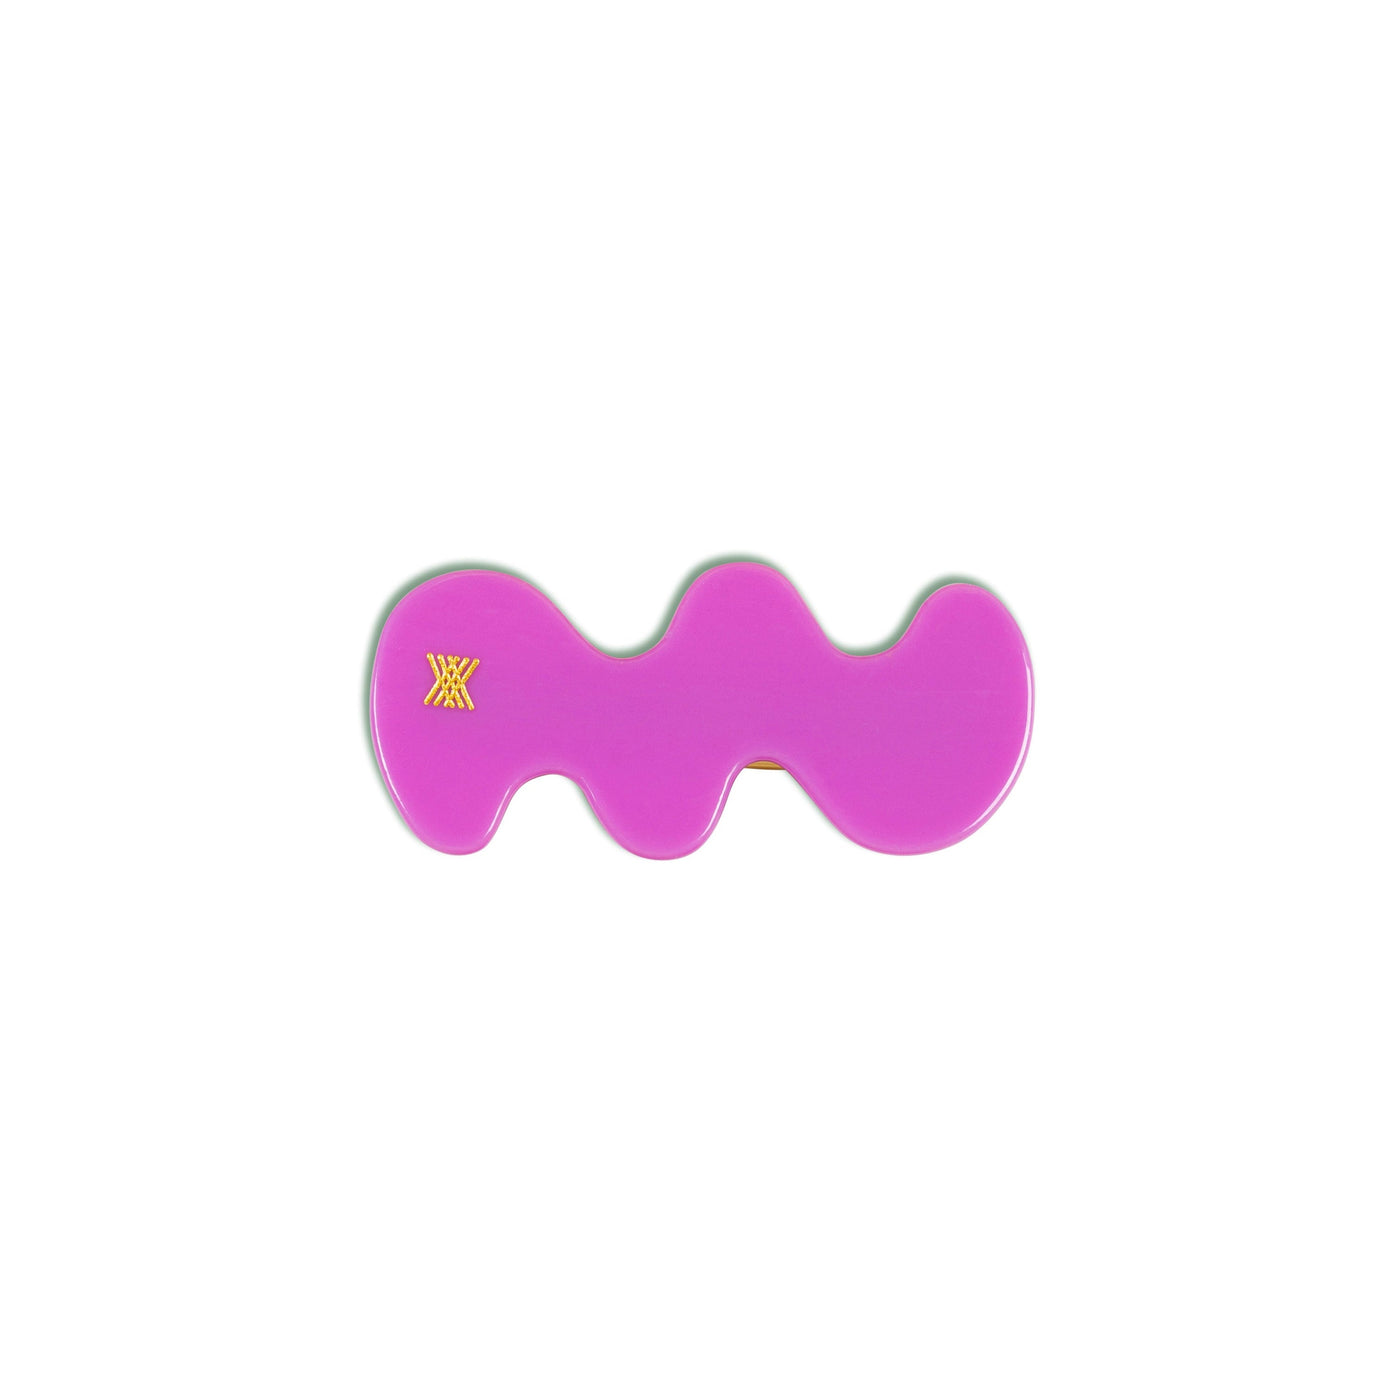 wavy hair clip - purple violet